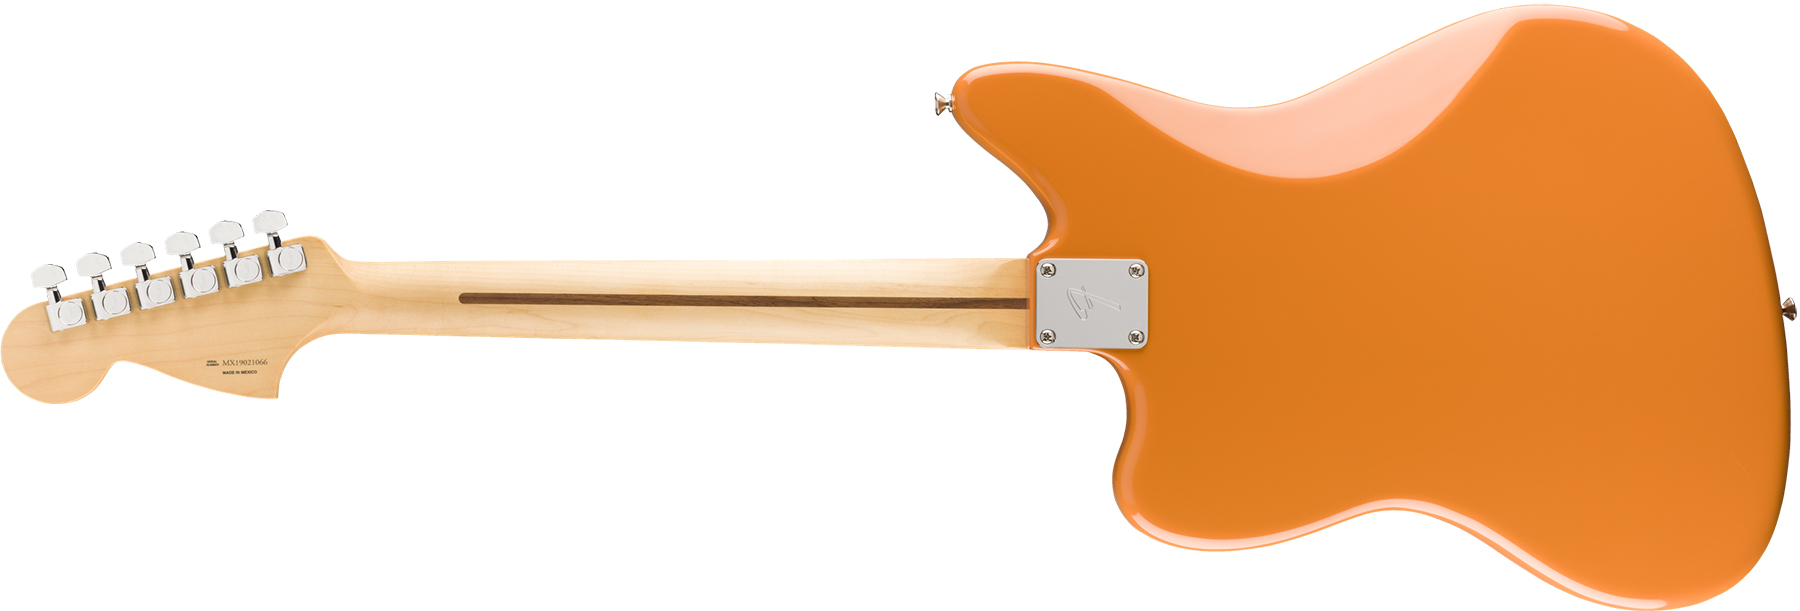 Fender Jaguar Player Mex Hs Pf - Capri Orange - Retro-rock elektrische gitaar - Variation 1